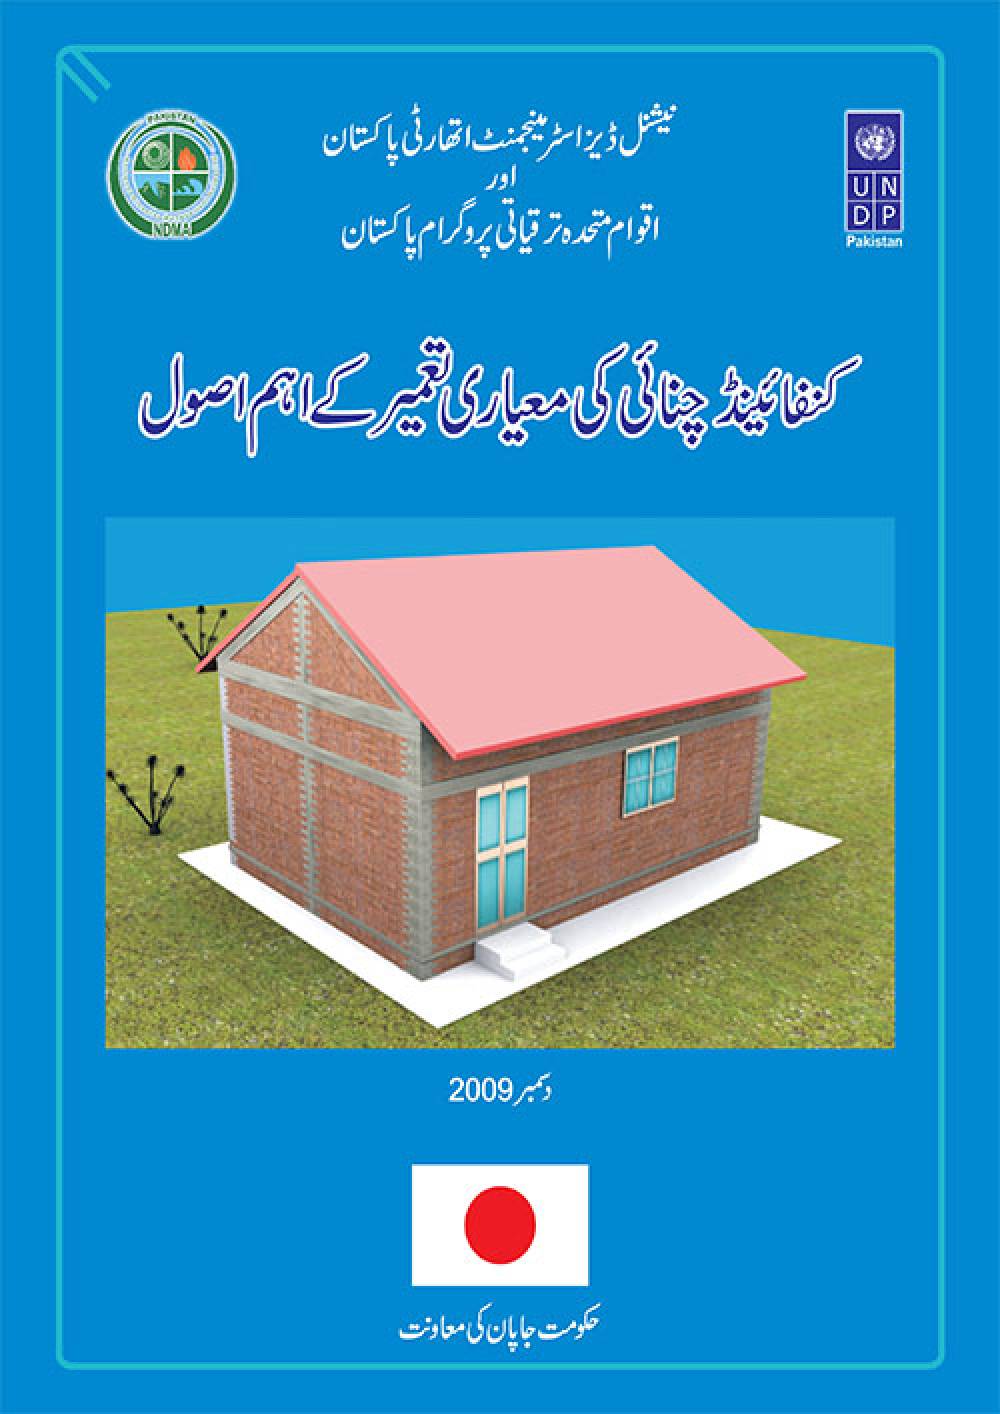 Easily Understandable Guidelines on EQ Safer Construction (Urdu)